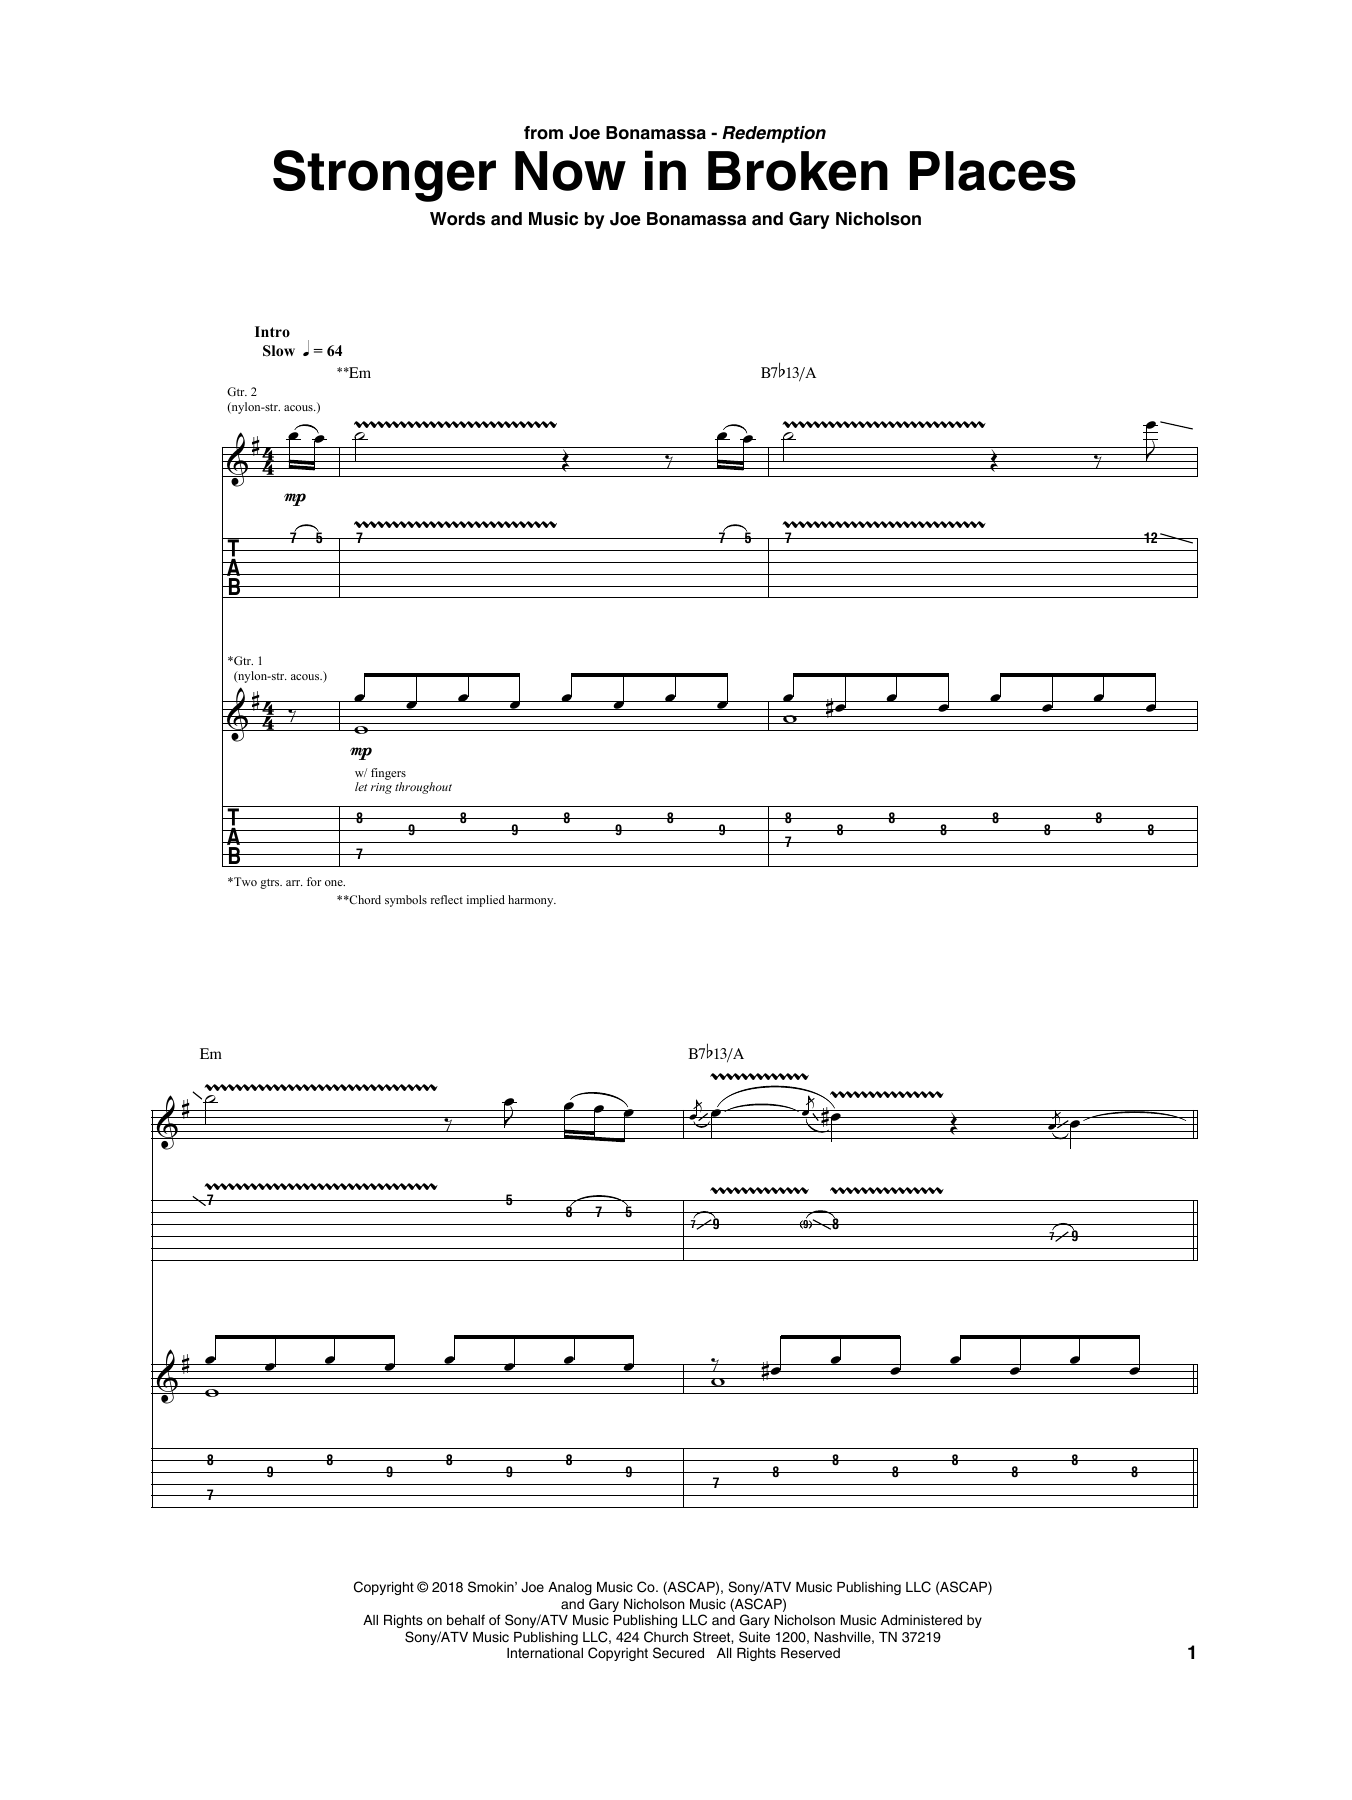 Joe Bonamassa Stronger Now In Broken Places Sheet Music Notes & Chords for Guitar Tab - Download or Print PDF